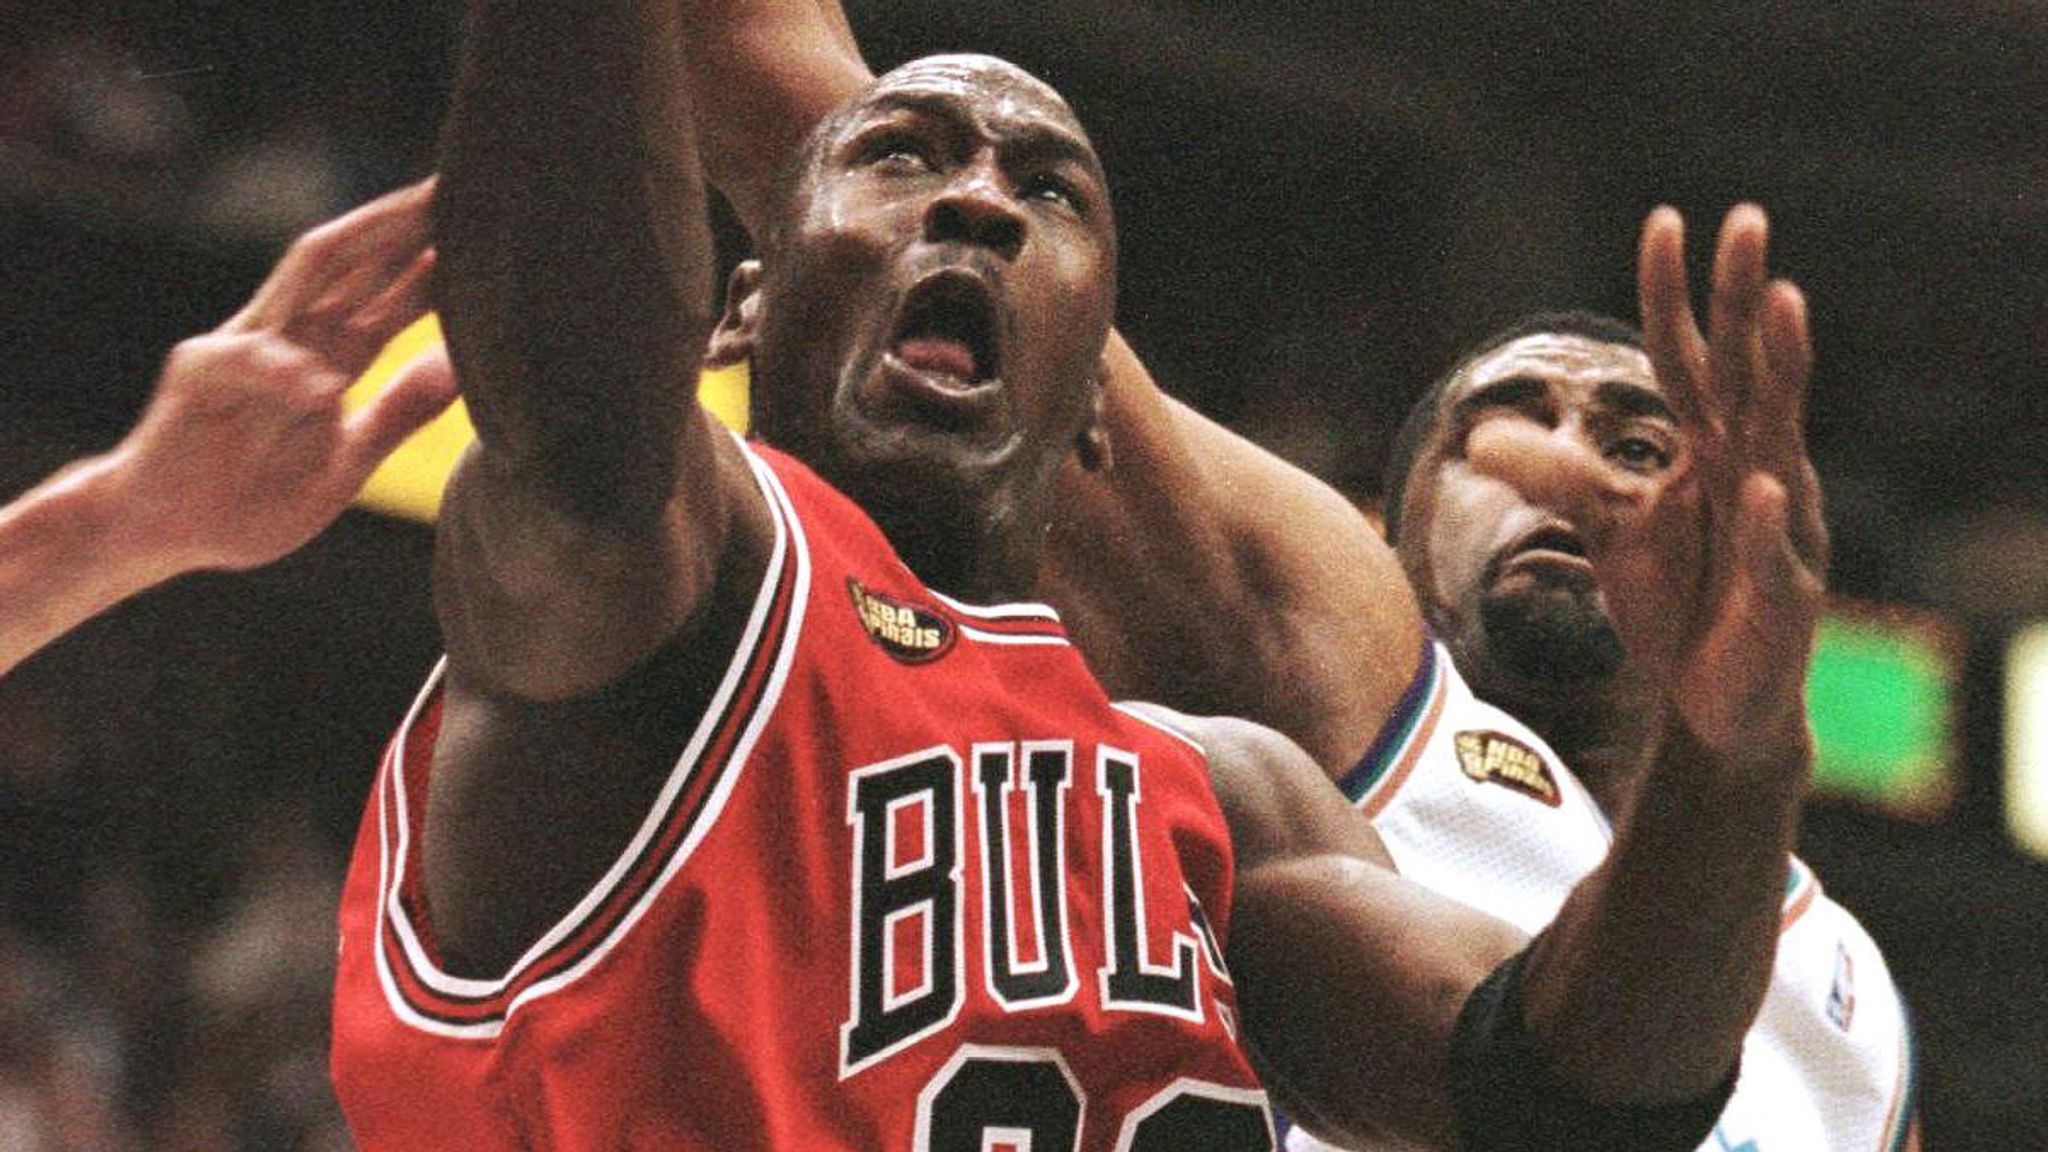 Relive Michael Jordan's top 10 moments ahead of 'The Last Dance